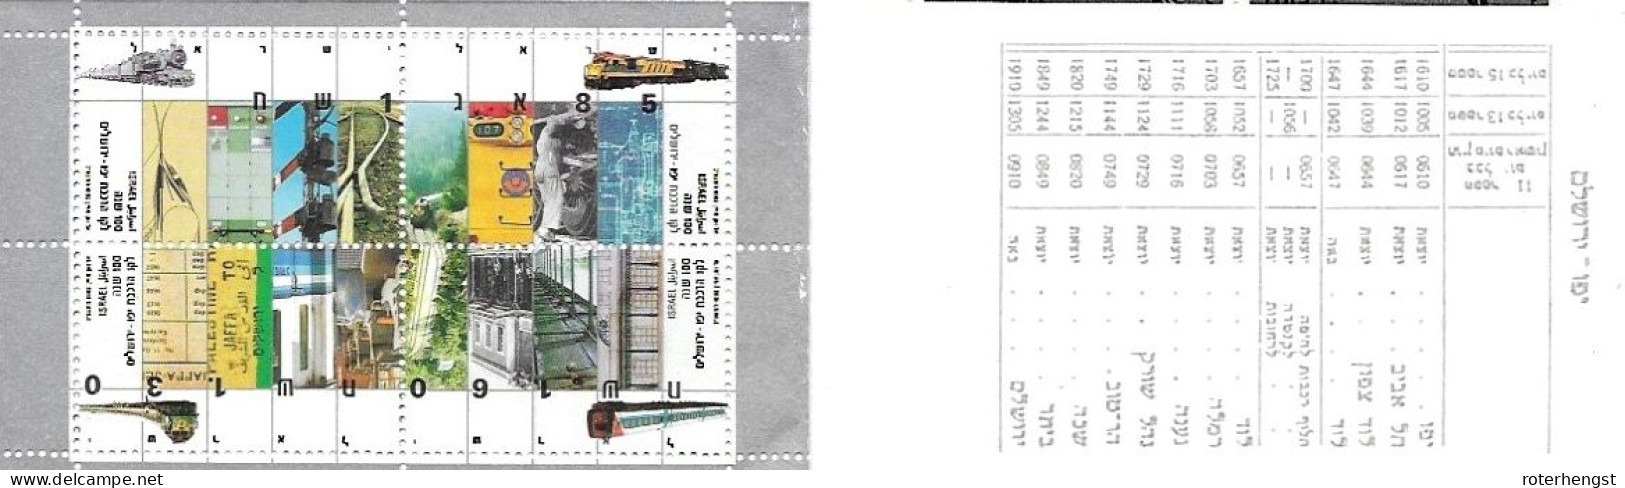 Israel Booklet Mnh ** 1992 15 Euros Train - Markenheftchen